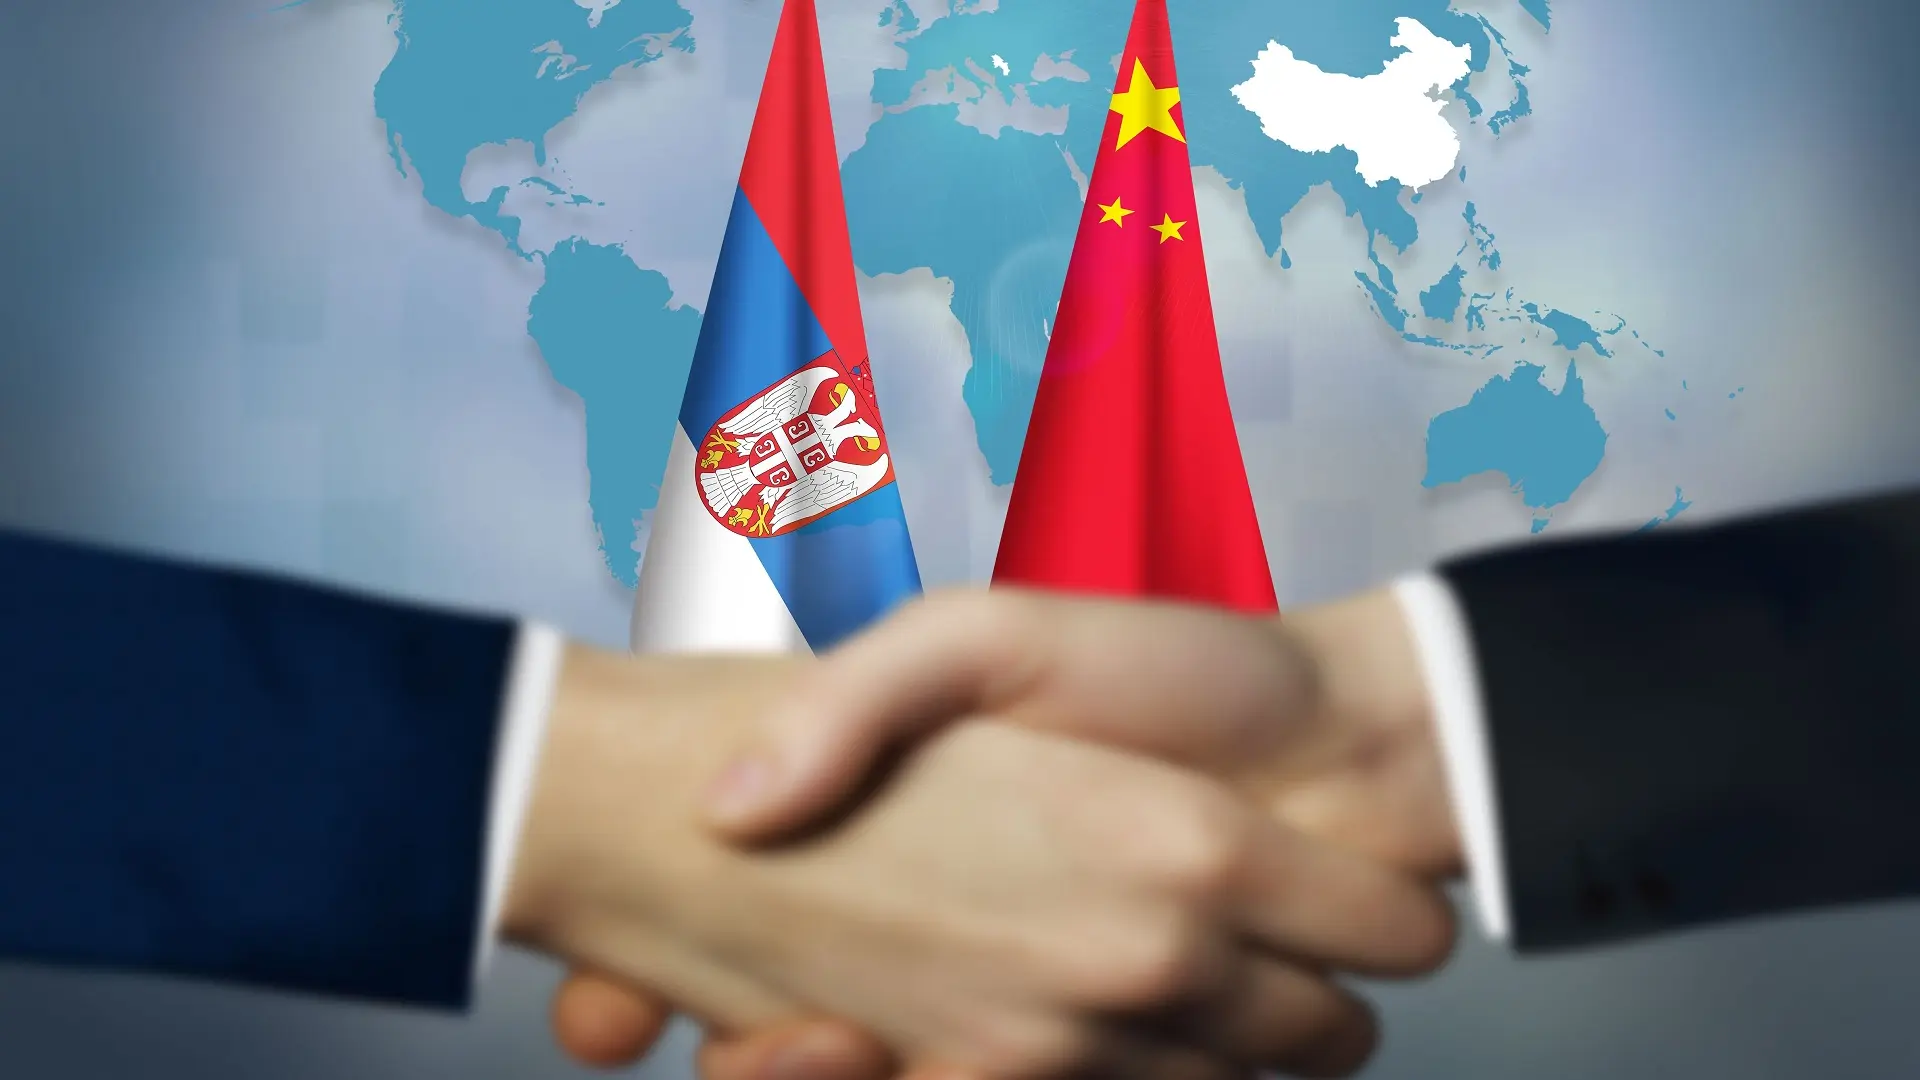 srbija, kina, srpska kineska zastava zastave ekonomija, saradnja srbije i kine - shutterstock-668241848f1dd.webp